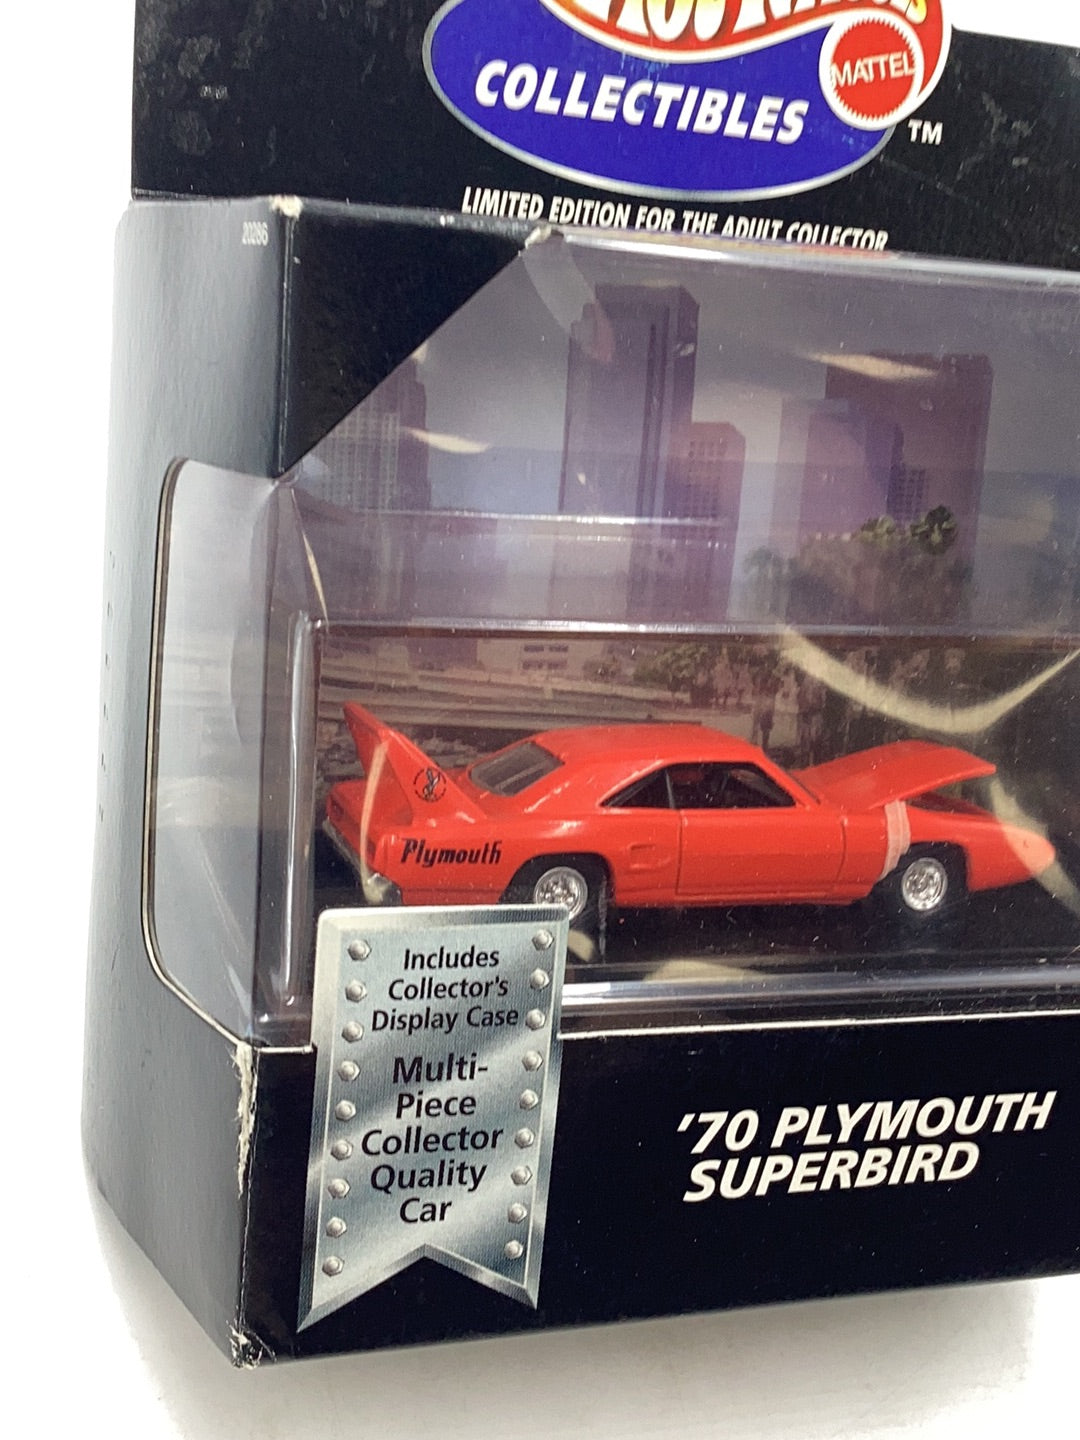 Hot Wheels Collectibles #8196 70 Plymouth Superbird